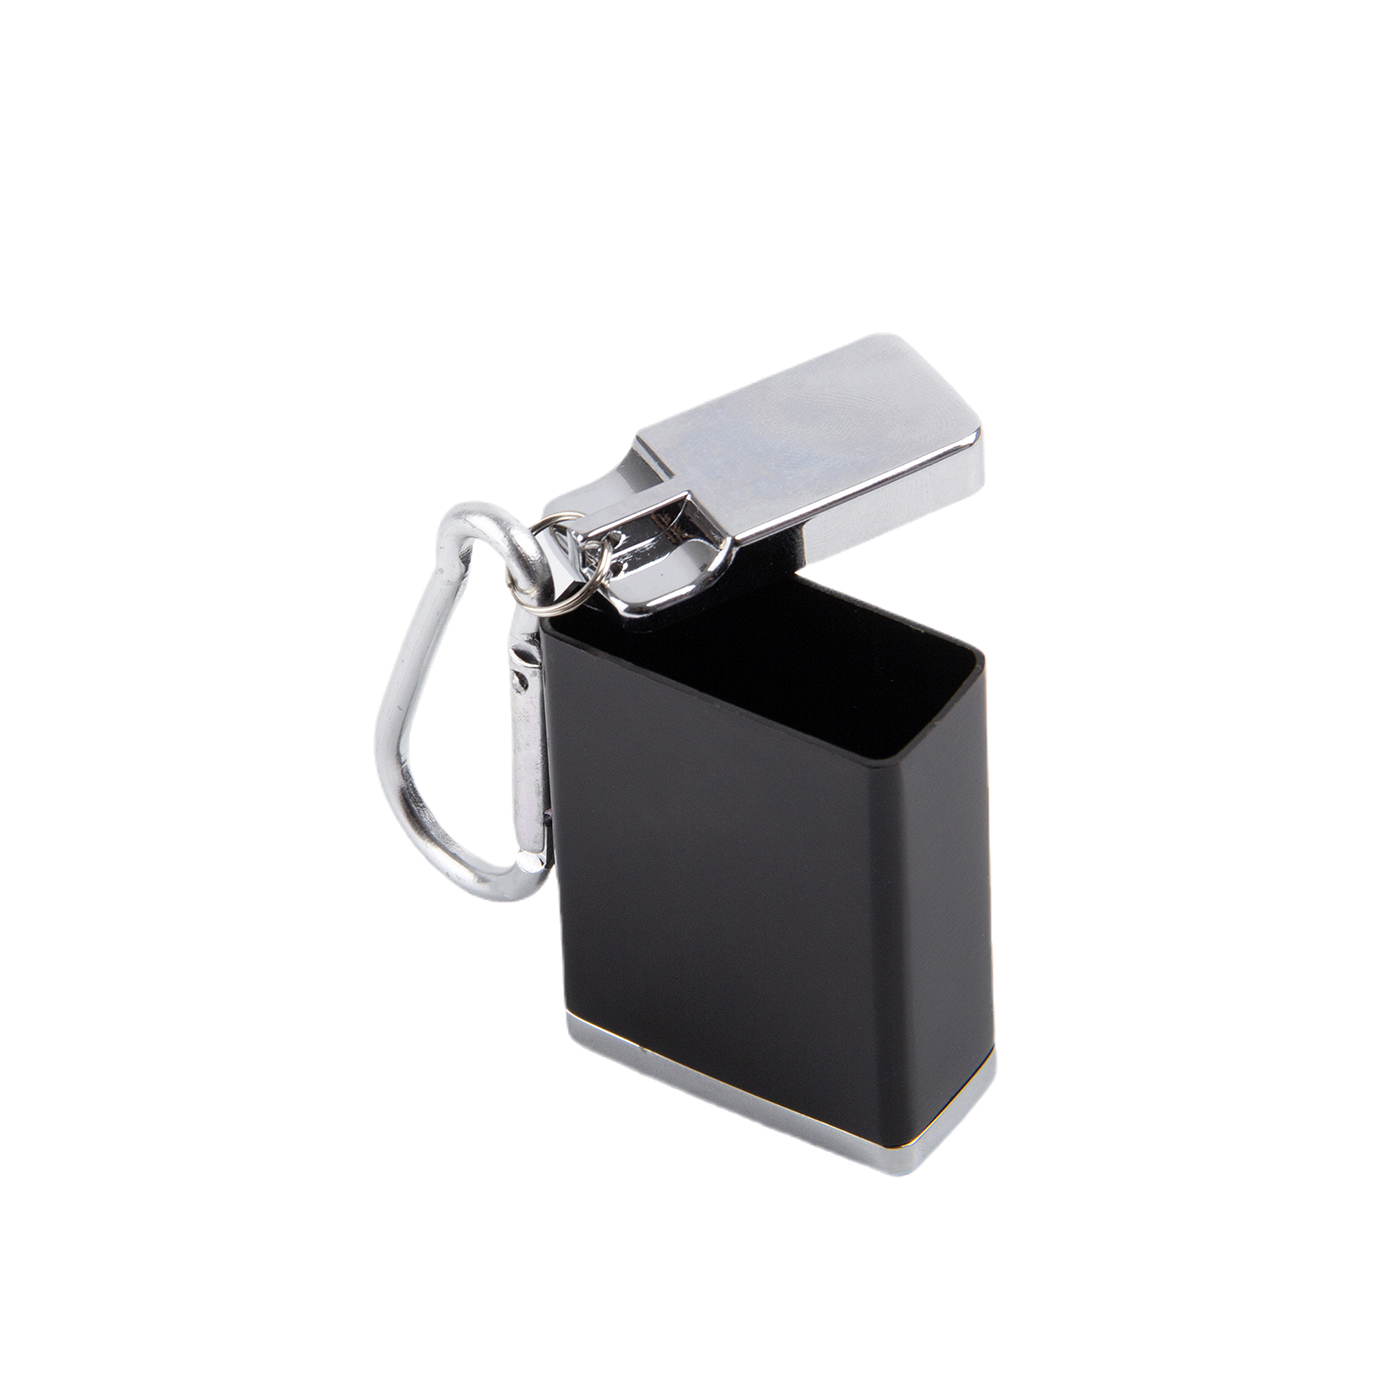 Portable Ashtray With Keychain2